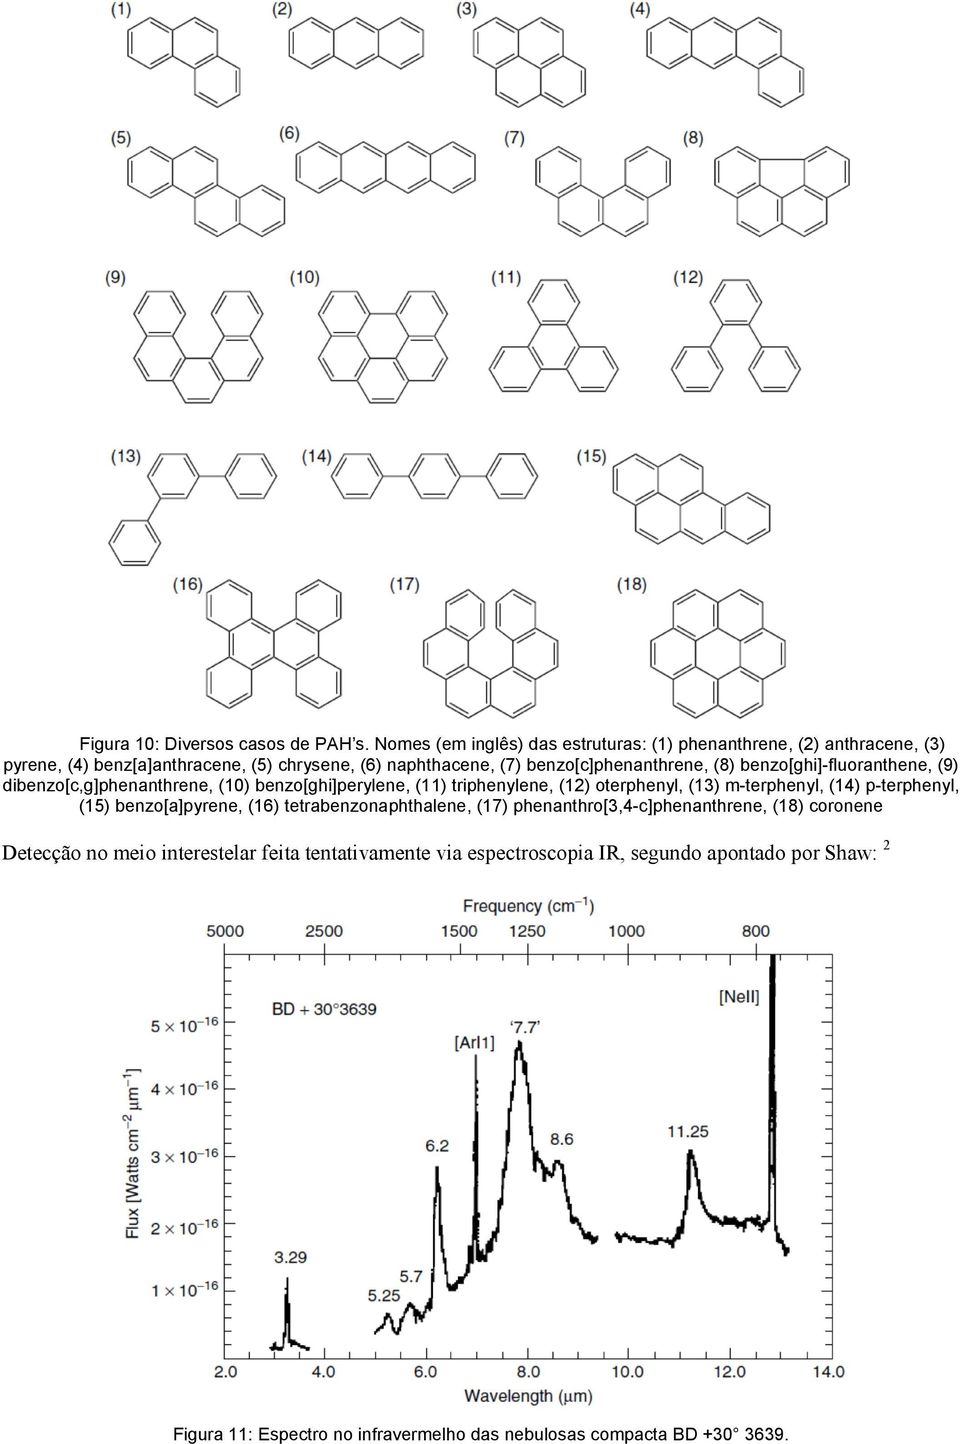 benzo[c]phenanthrene, (8) benzo[ghi]-fluoranthene, (9) dibenzo[c,g]phenanthrene, (10) benzo[ghi]perylene, (11) triphenylene, (12) oterphenyl, (13)